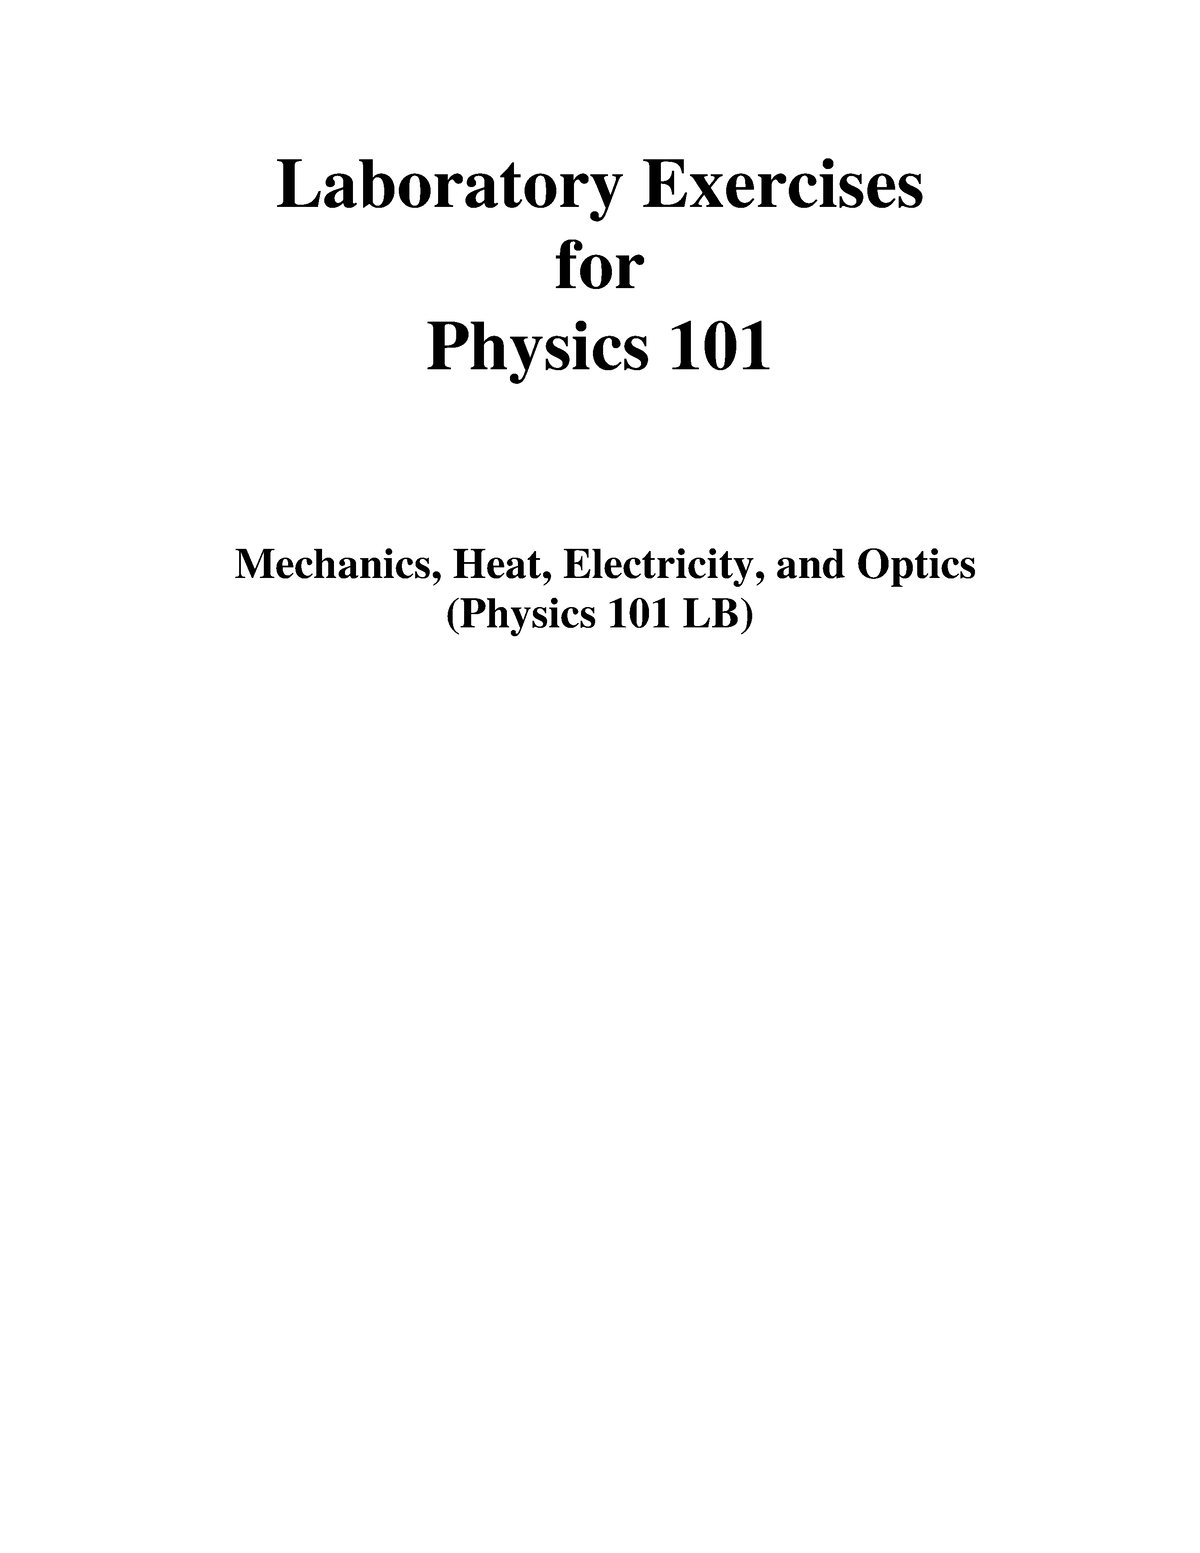 physics 101 lab 2 uiuc